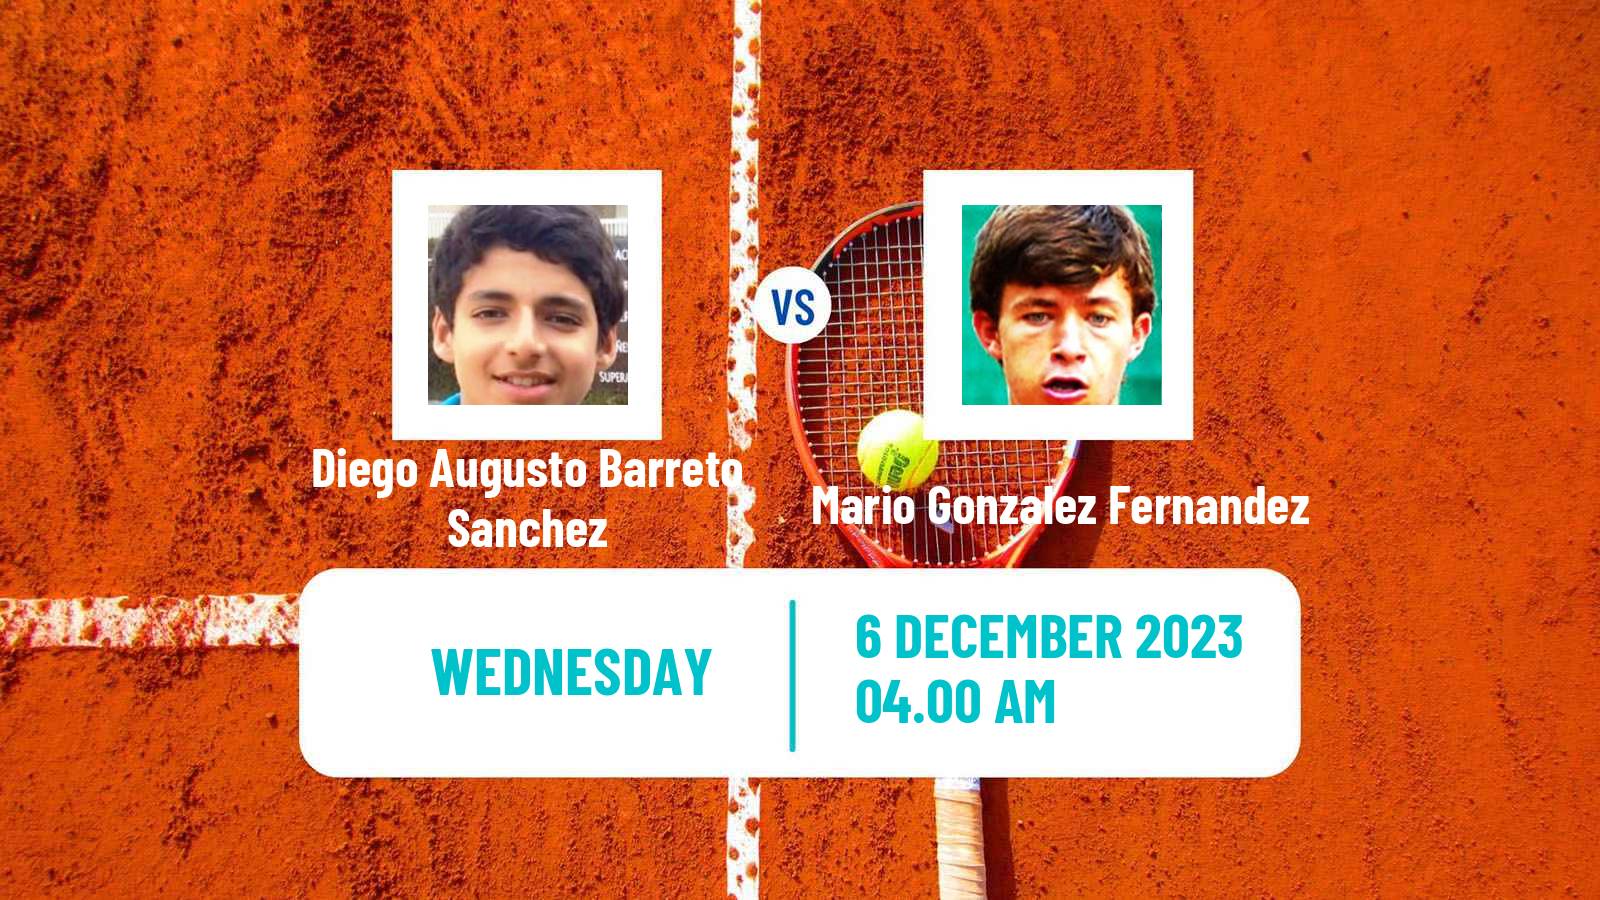 Tennis ITF M15 Madrid 3 Men Diego Augusto Barreto Sanchez - Mario Gonzalez Fernandez